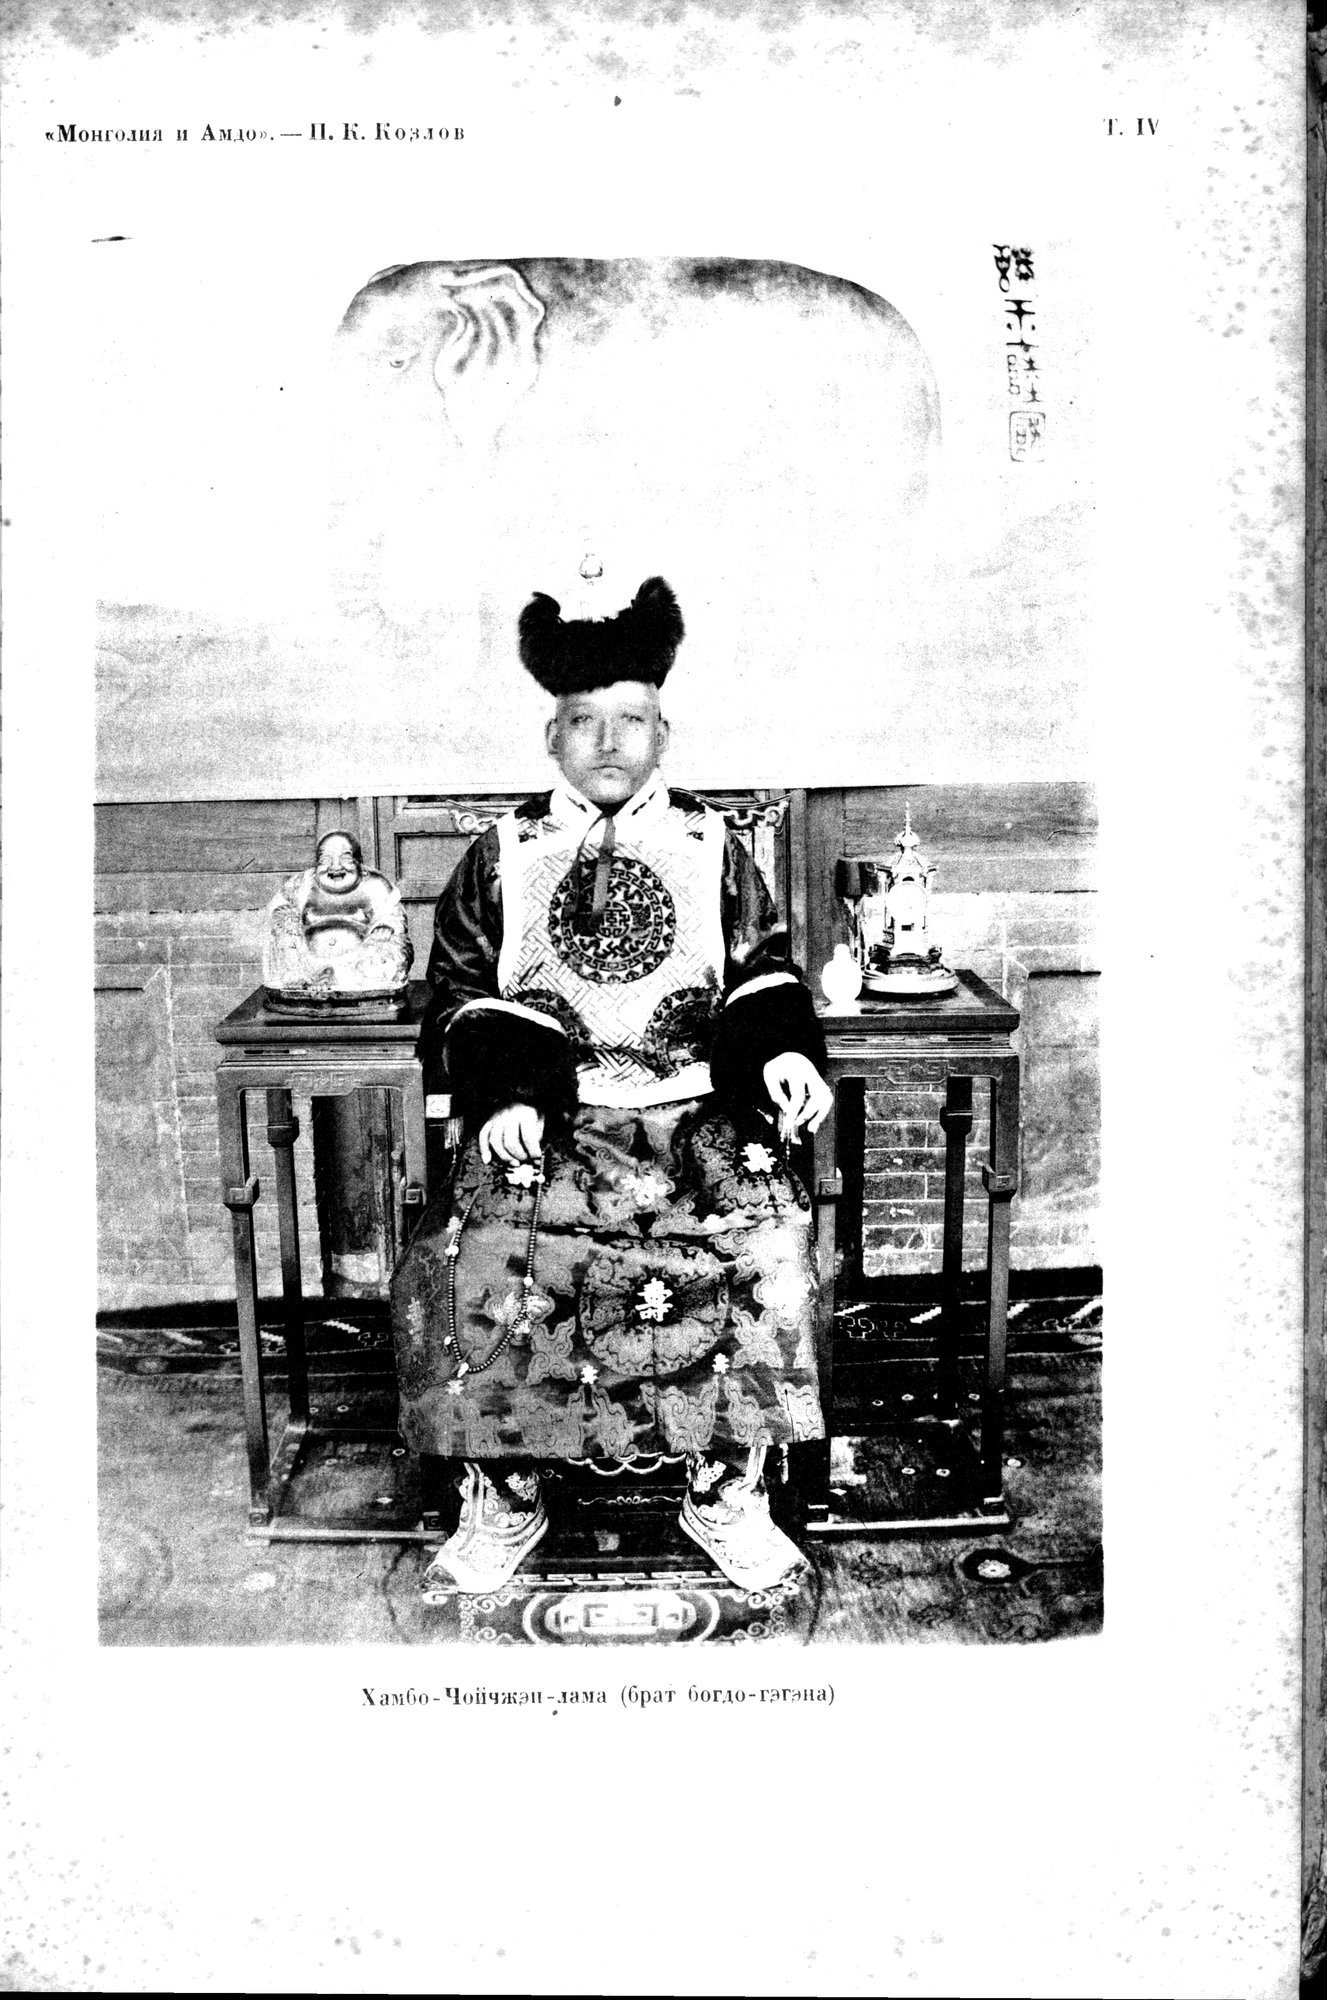 Mongoliya i Amdo i mertby gorod Khara-Khoto : vol.1 / Page 49 (Grayscale High Resolution Image)